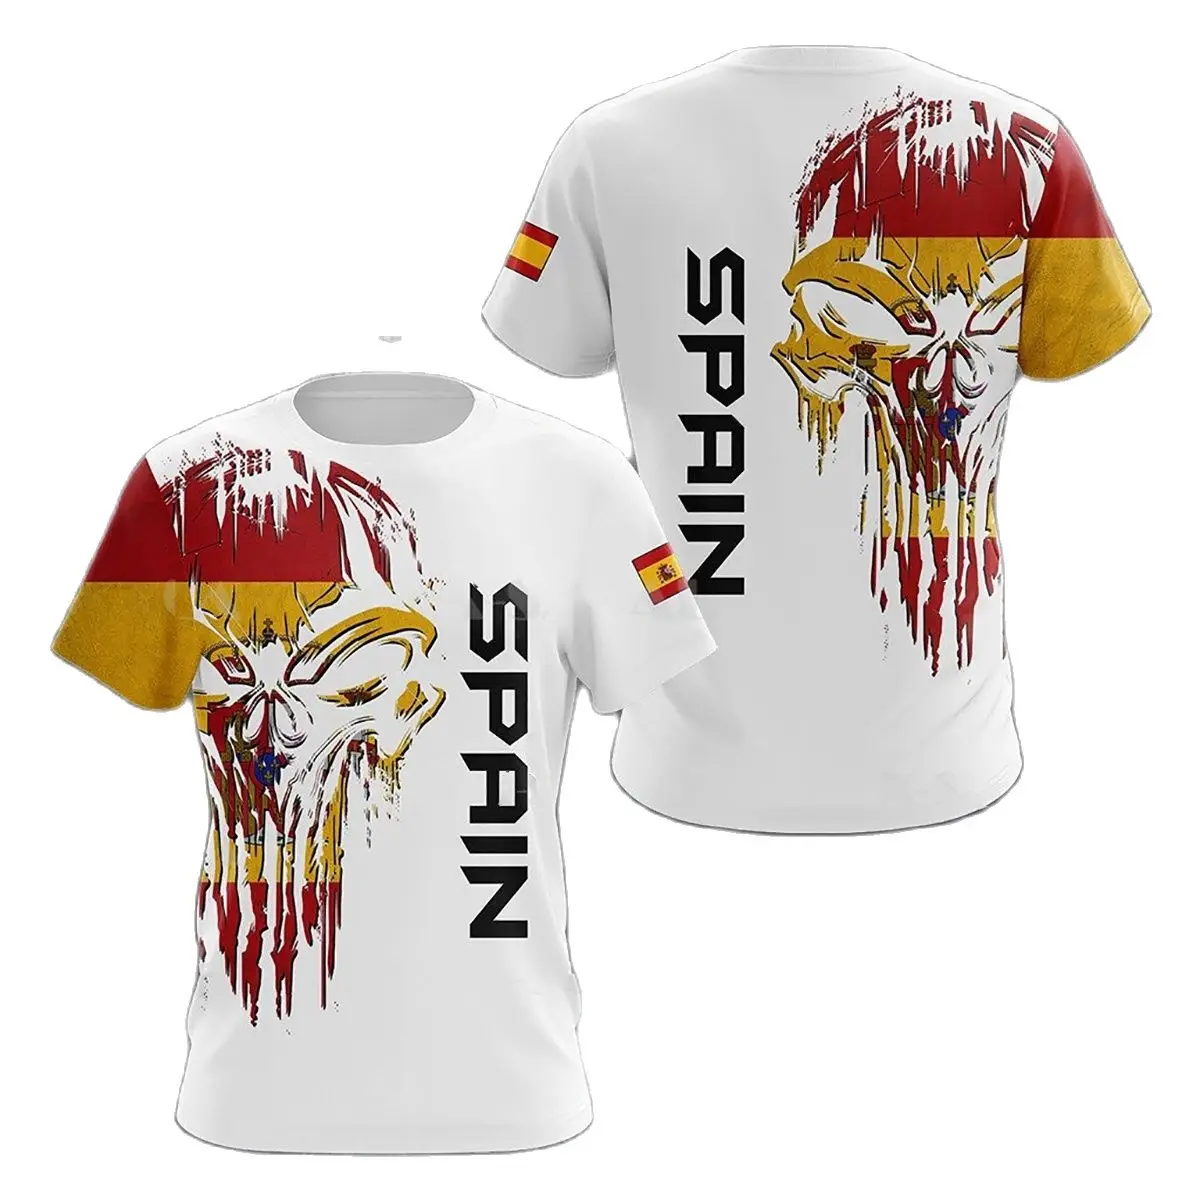 SPAIN Spain National Emblem Printed 3D Men's T-Shirt O-Neck Short Sleeve Fashion Cool Clothing Large Size Loose Shirt For Men